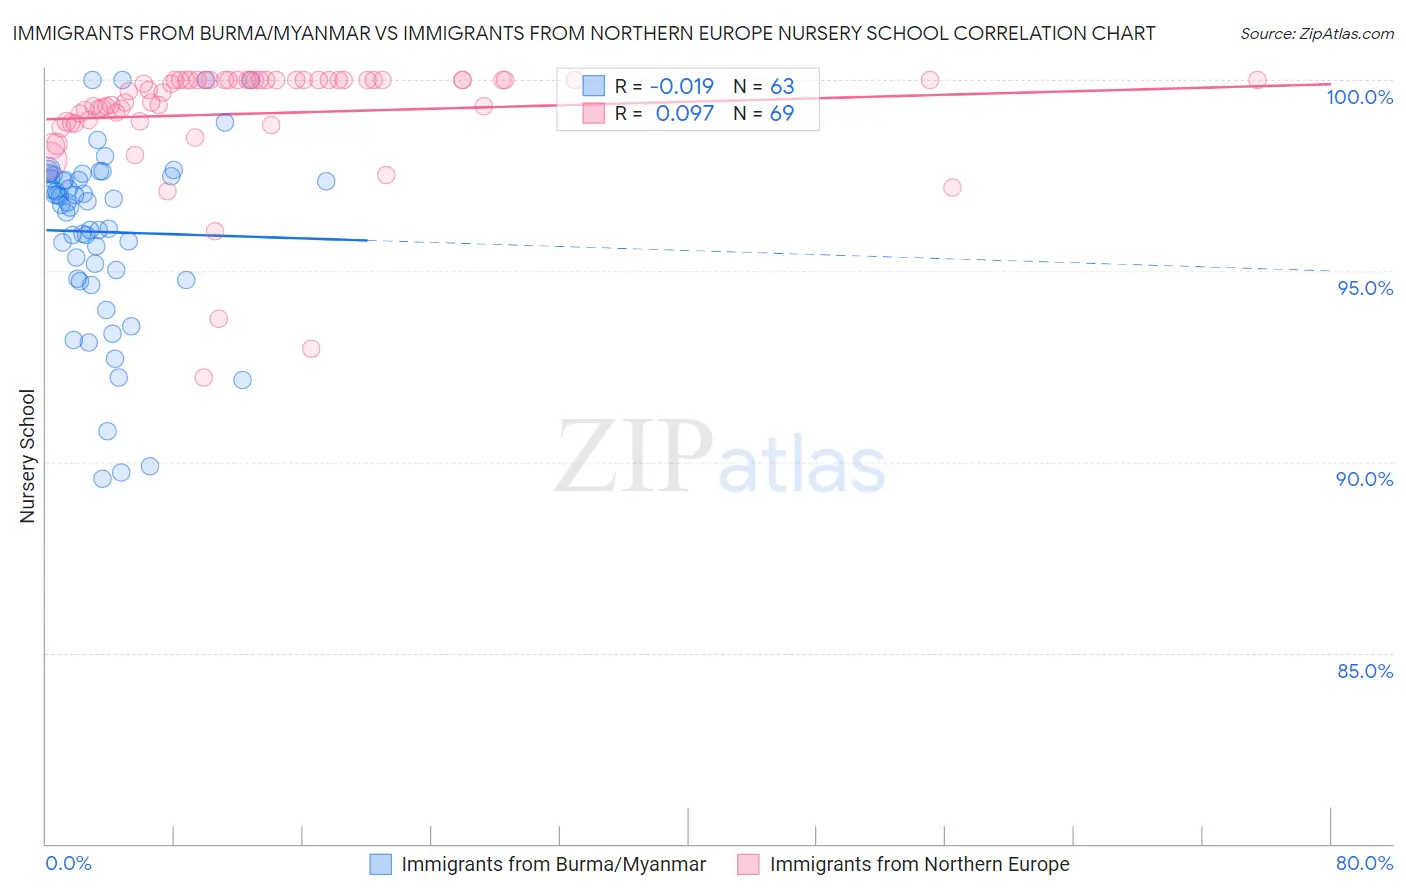 Immigrants from Burma/Myanmar vs Immigrants from Northern Europe Nursery School